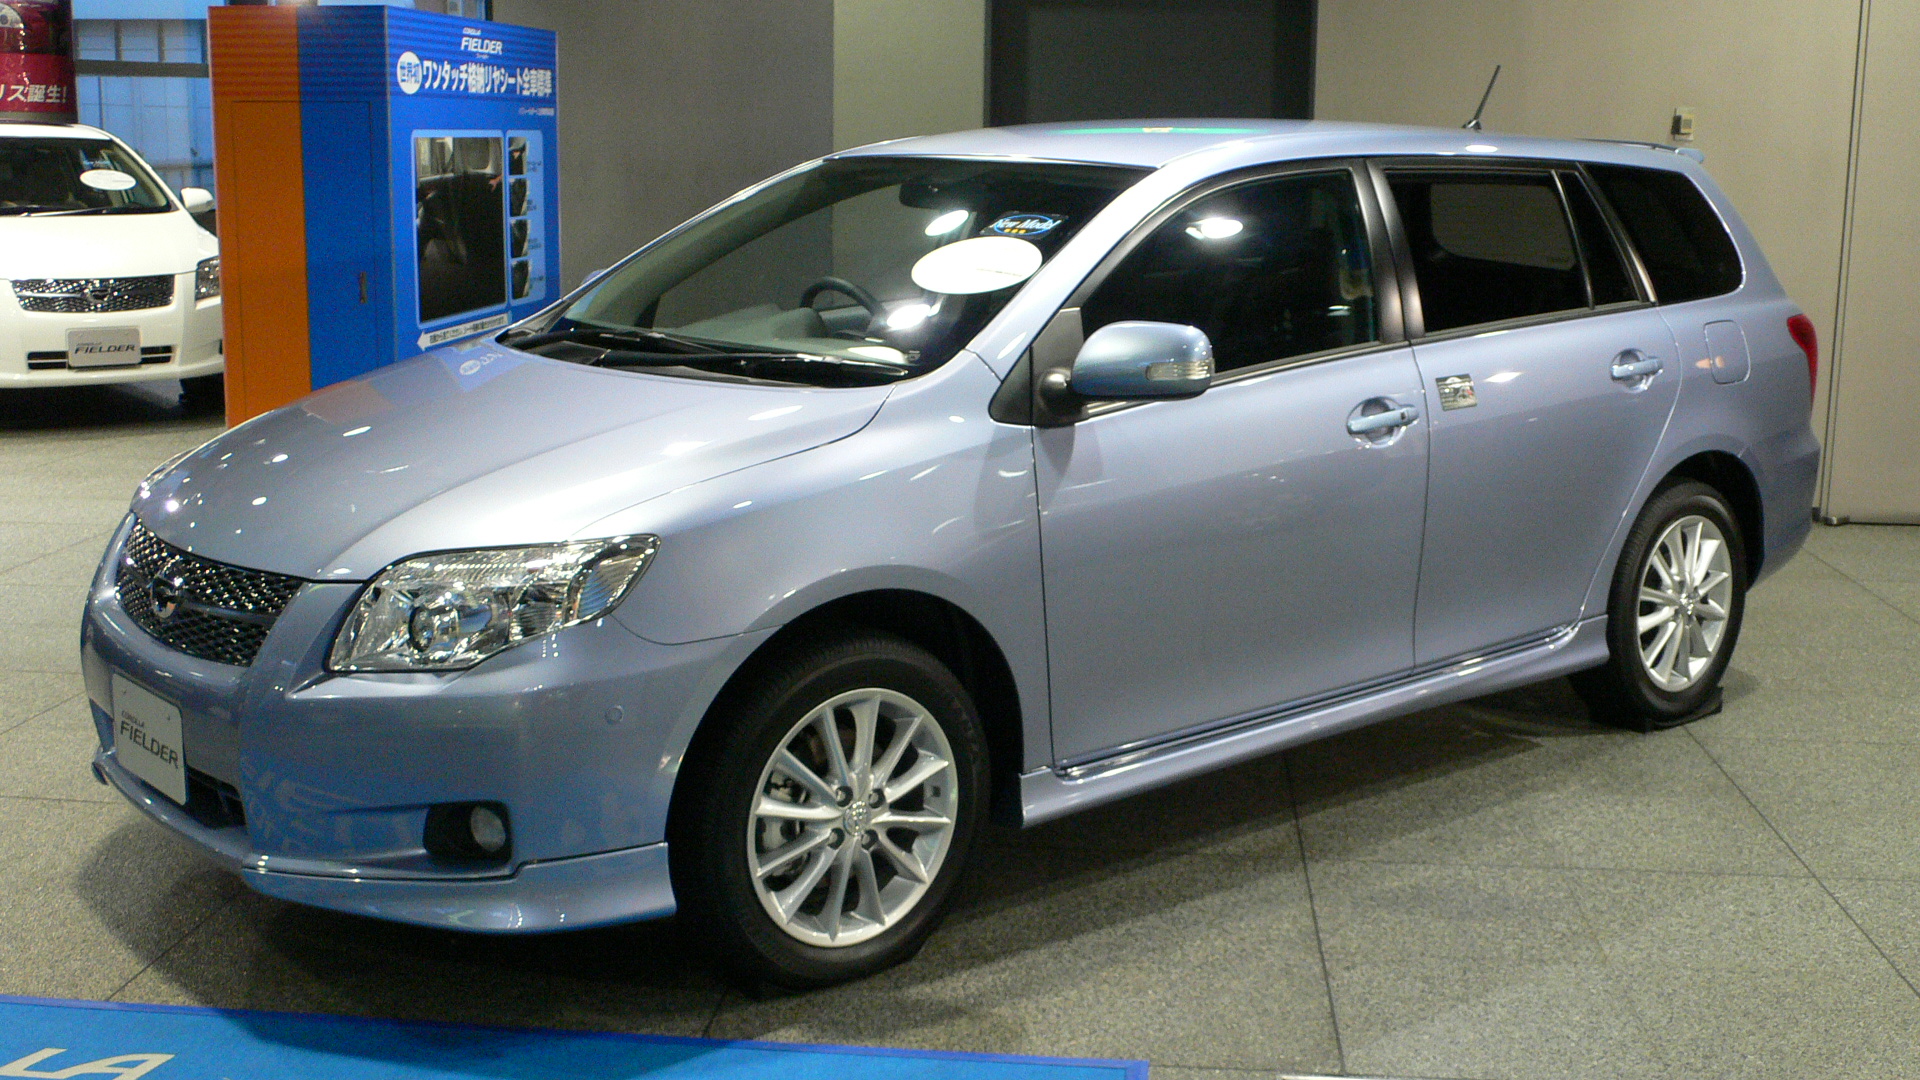 Toyota Corolla Fielder Exterior Side View